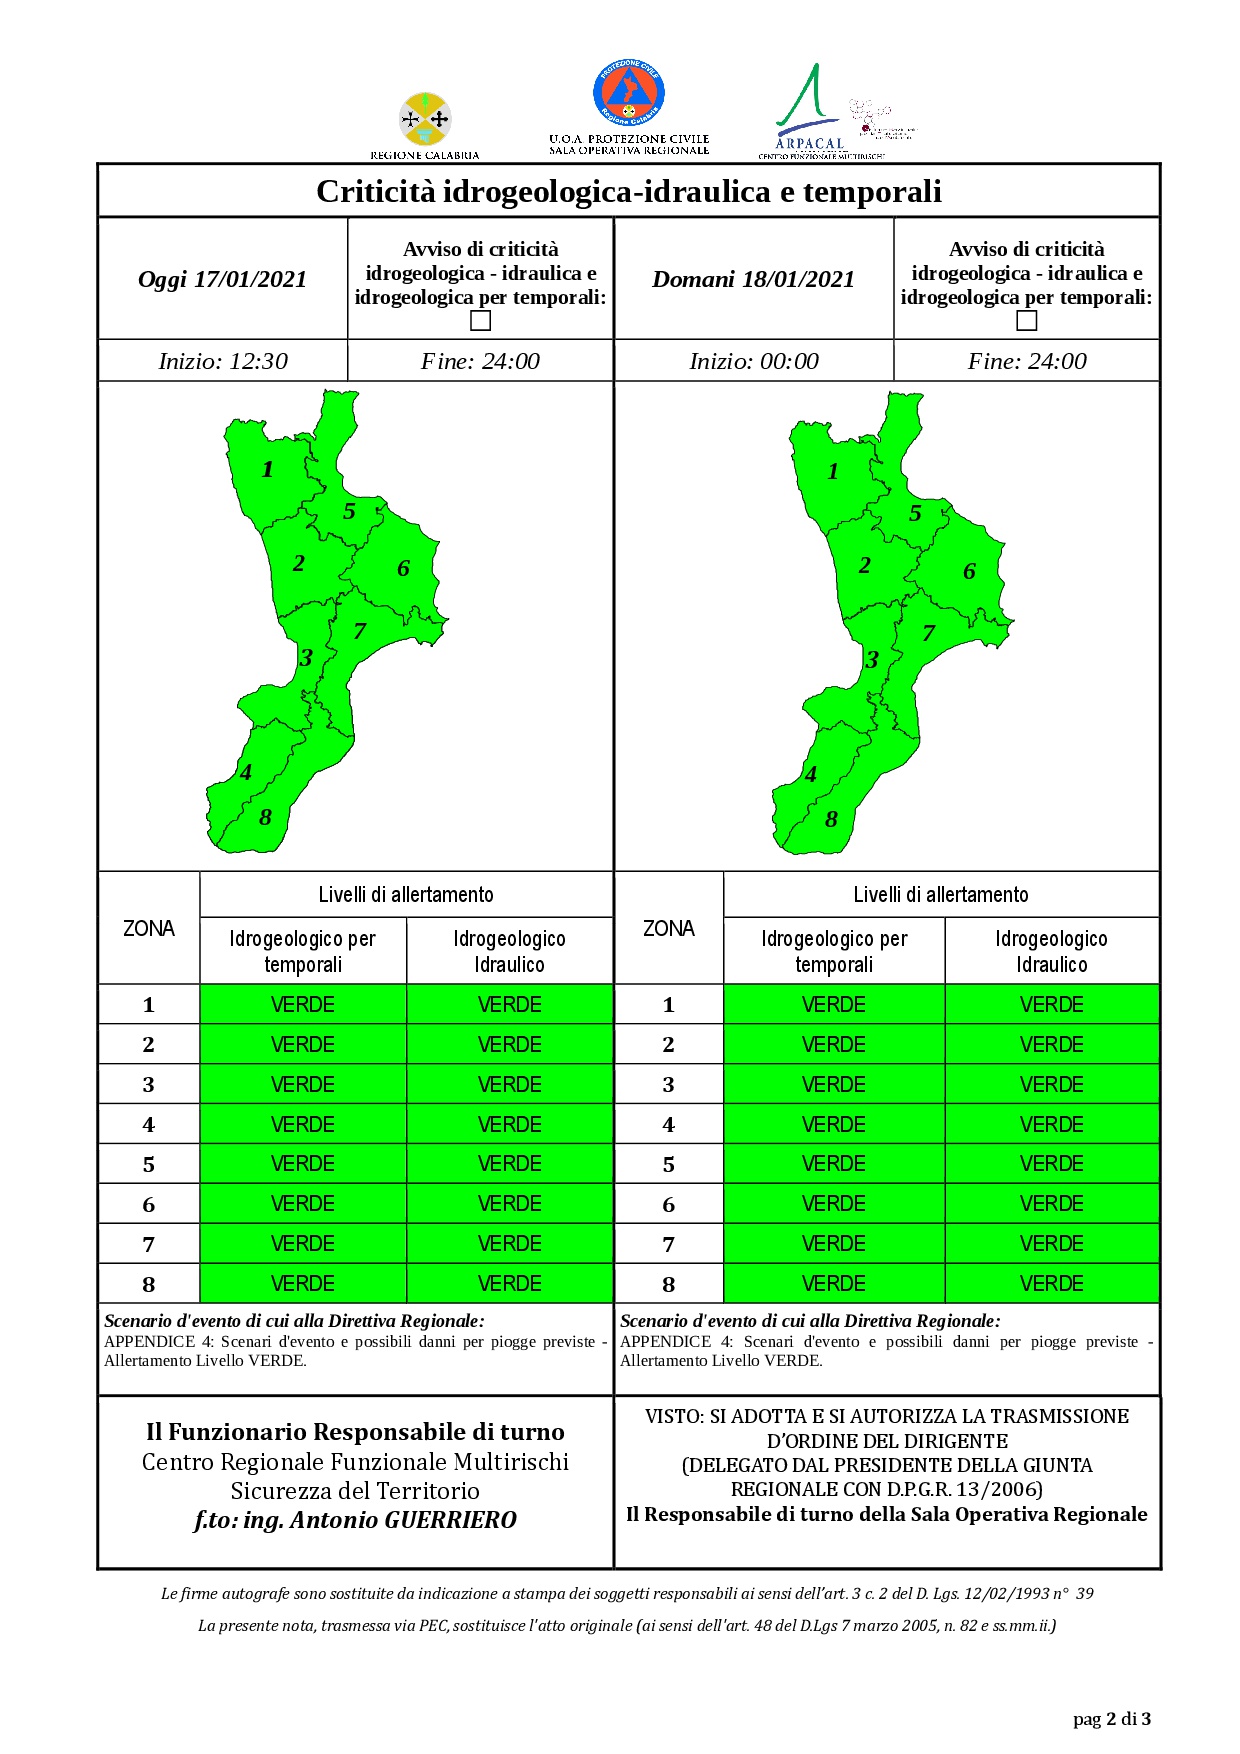 Criticità idrogeologica-idraulica e temporali in Calabria 17-01-2021